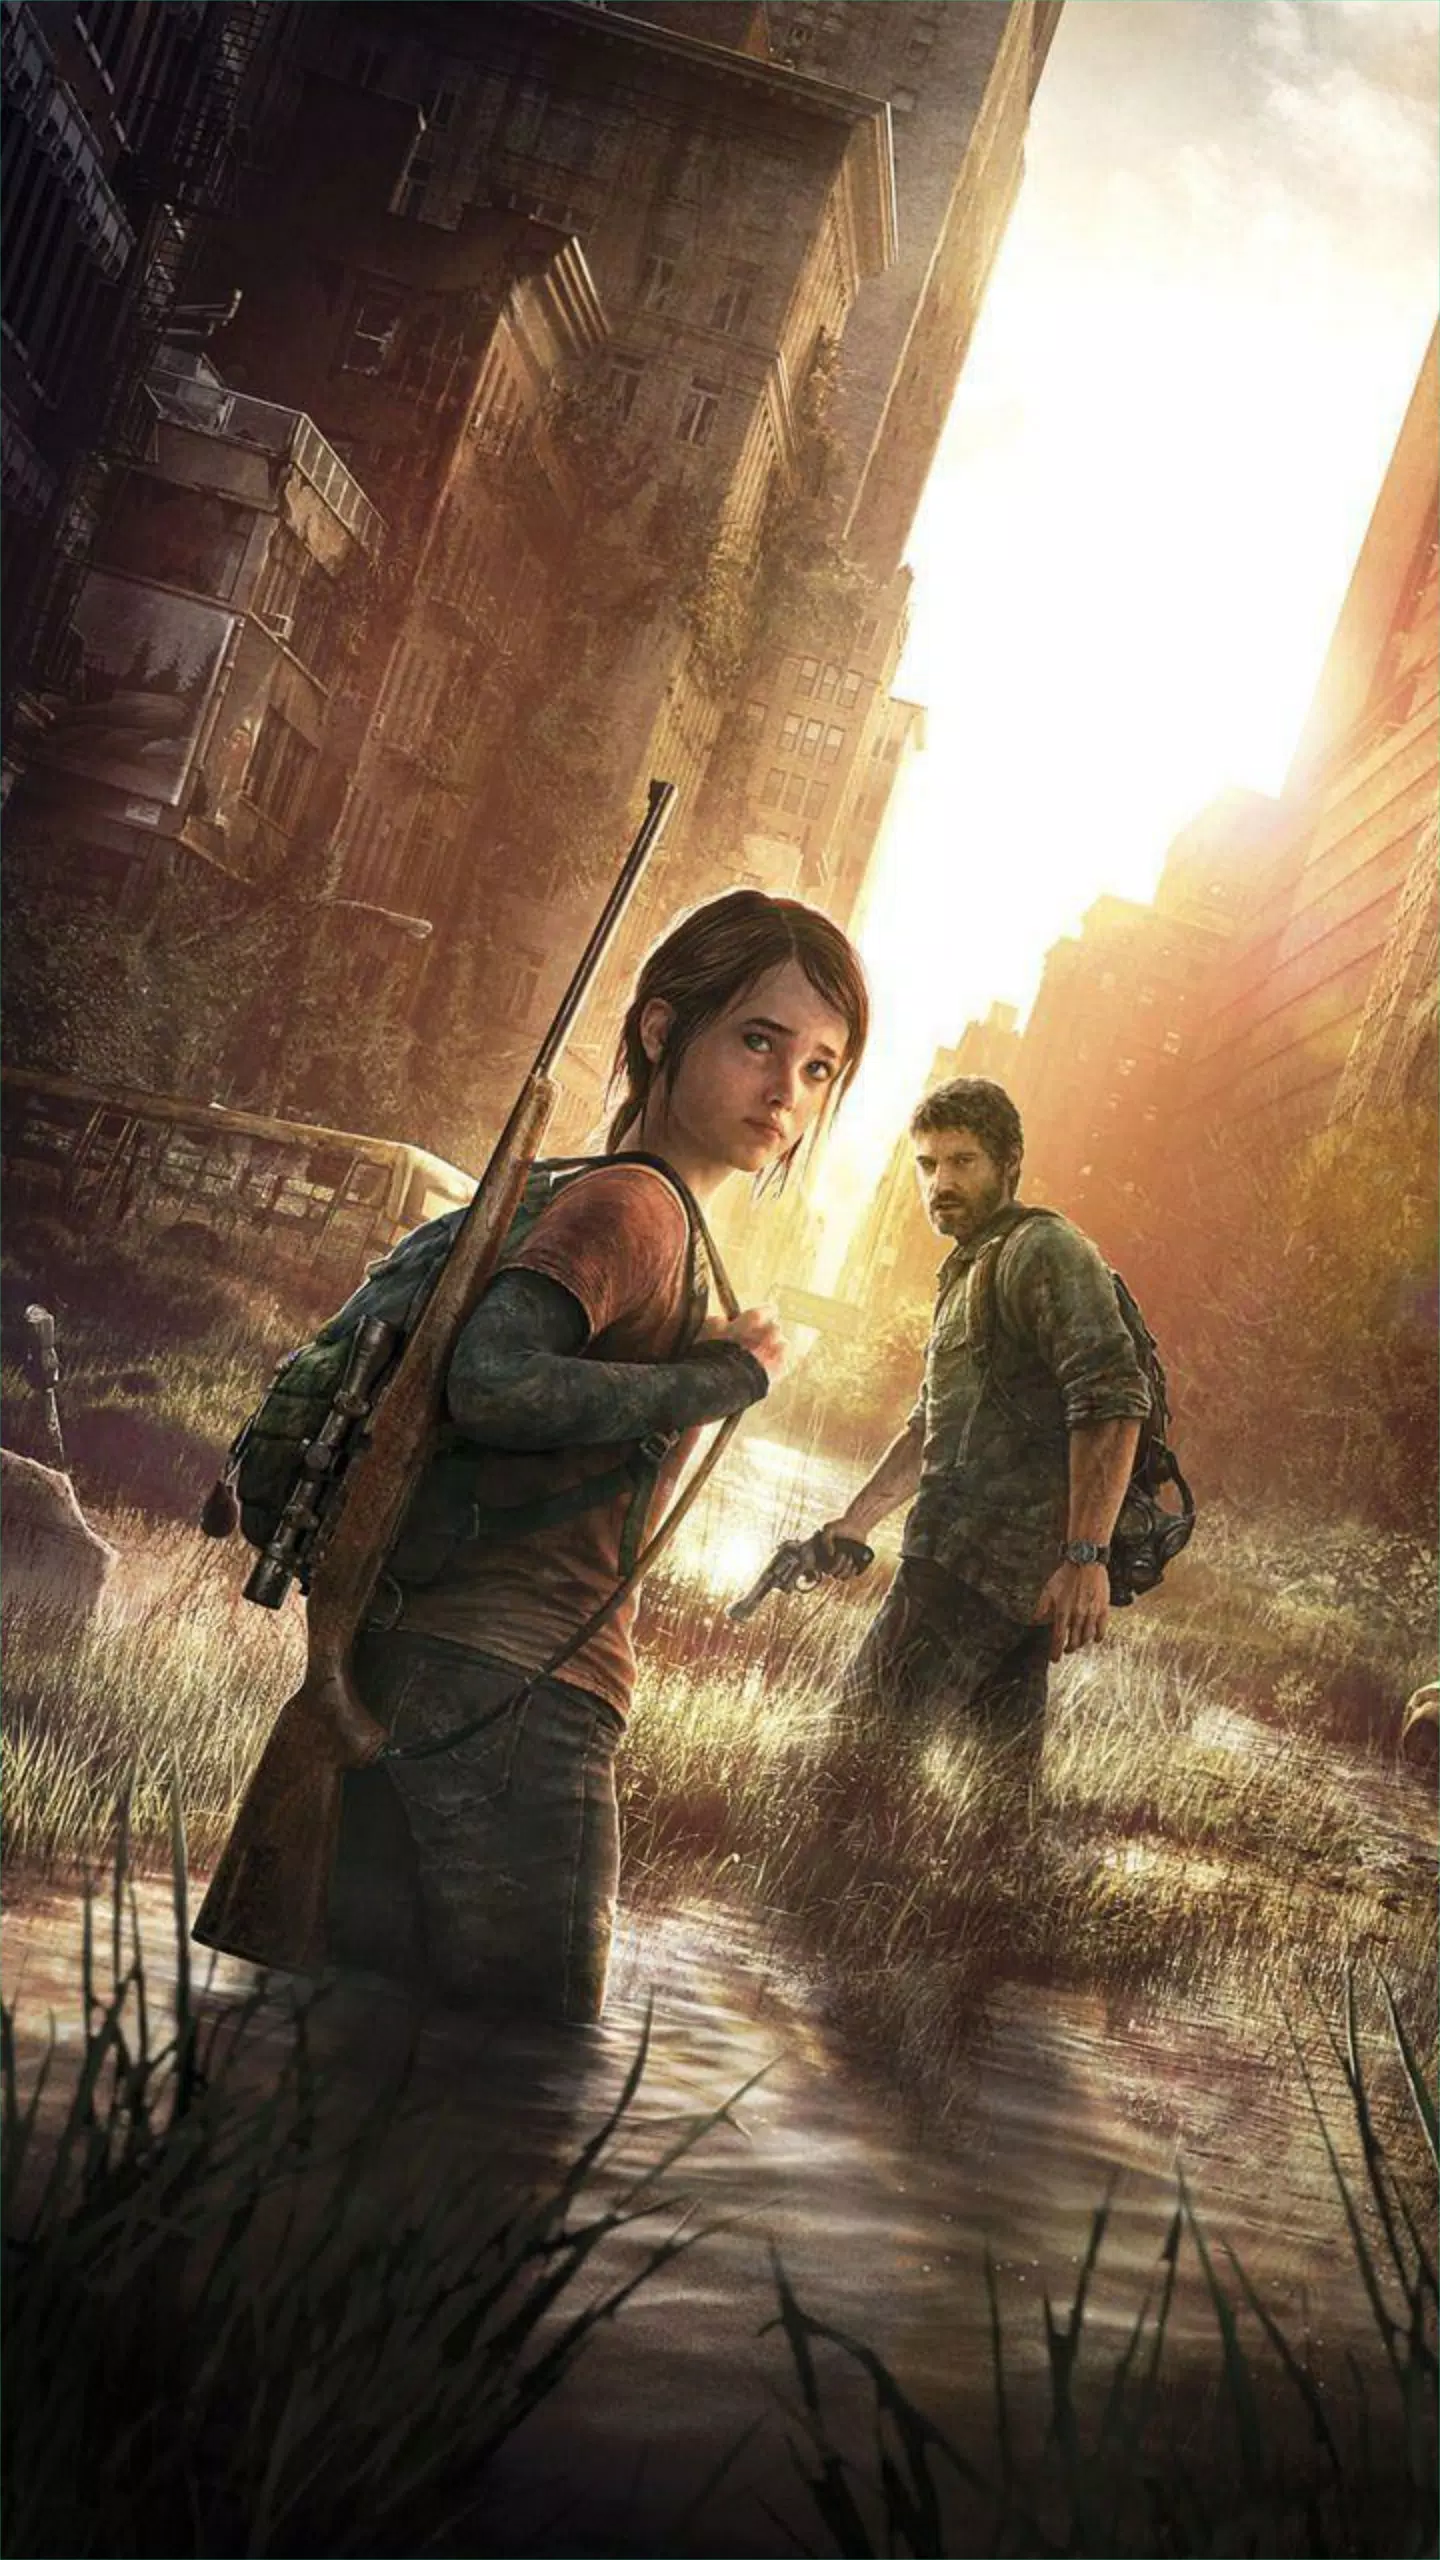 Download do APK de The Last Of Us Wallpaper 4k para Android